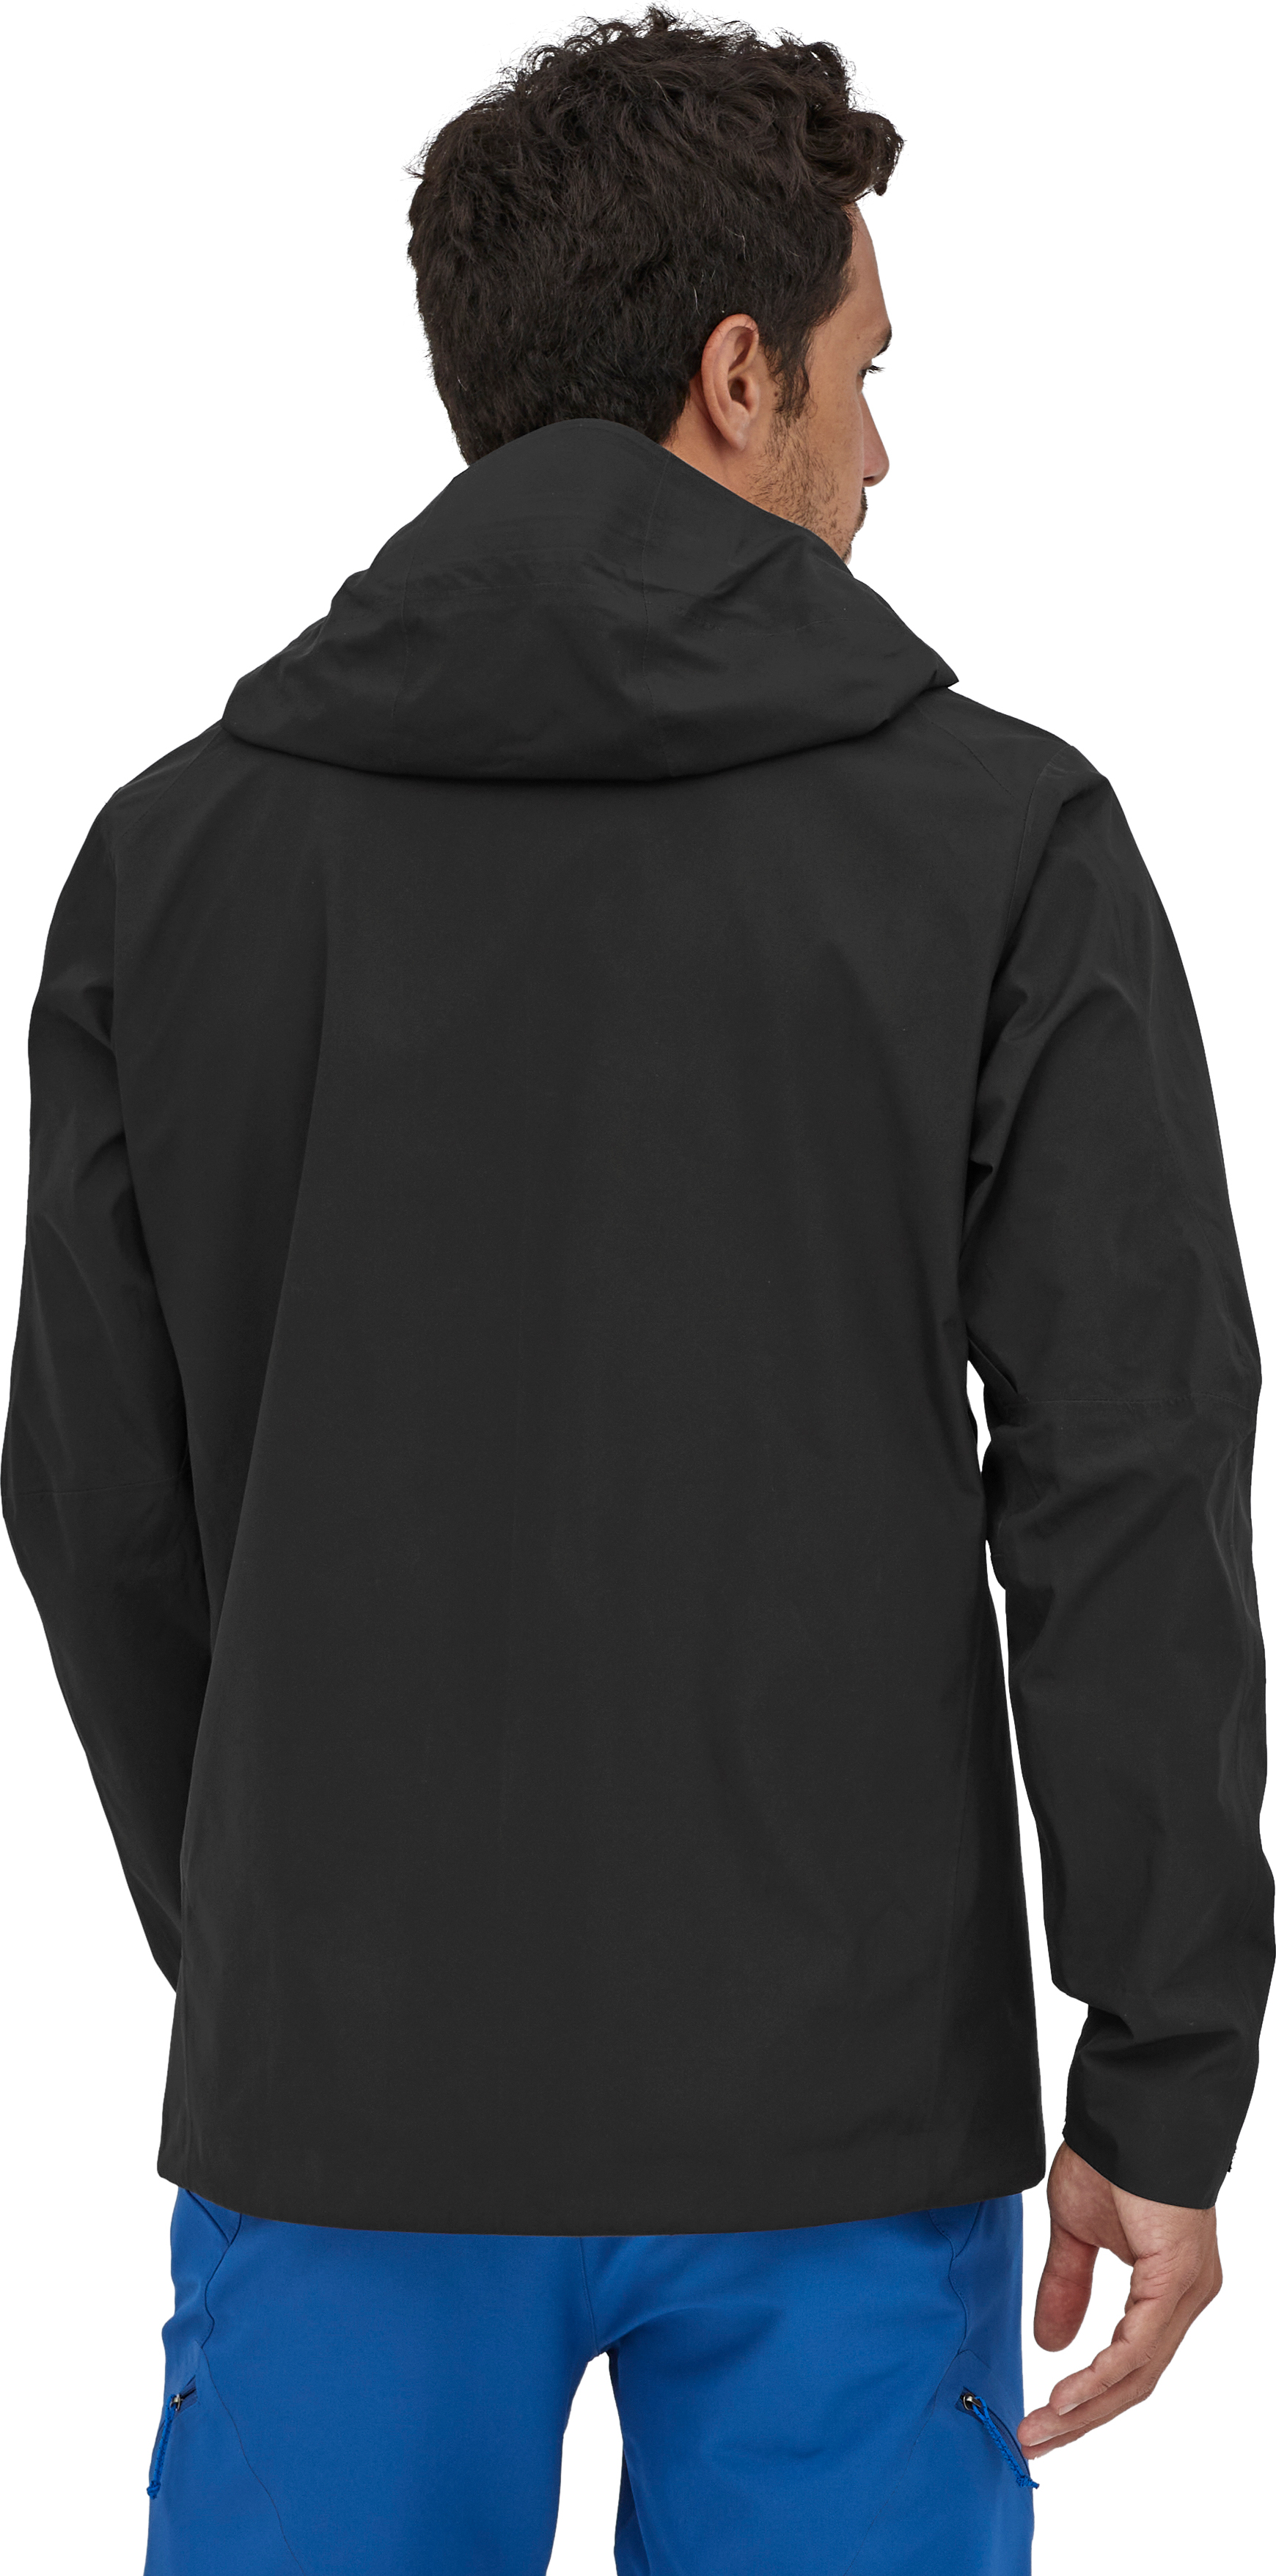 Men's Calcite Jacket Black | Buy Men's Calcite Jacket Black here 